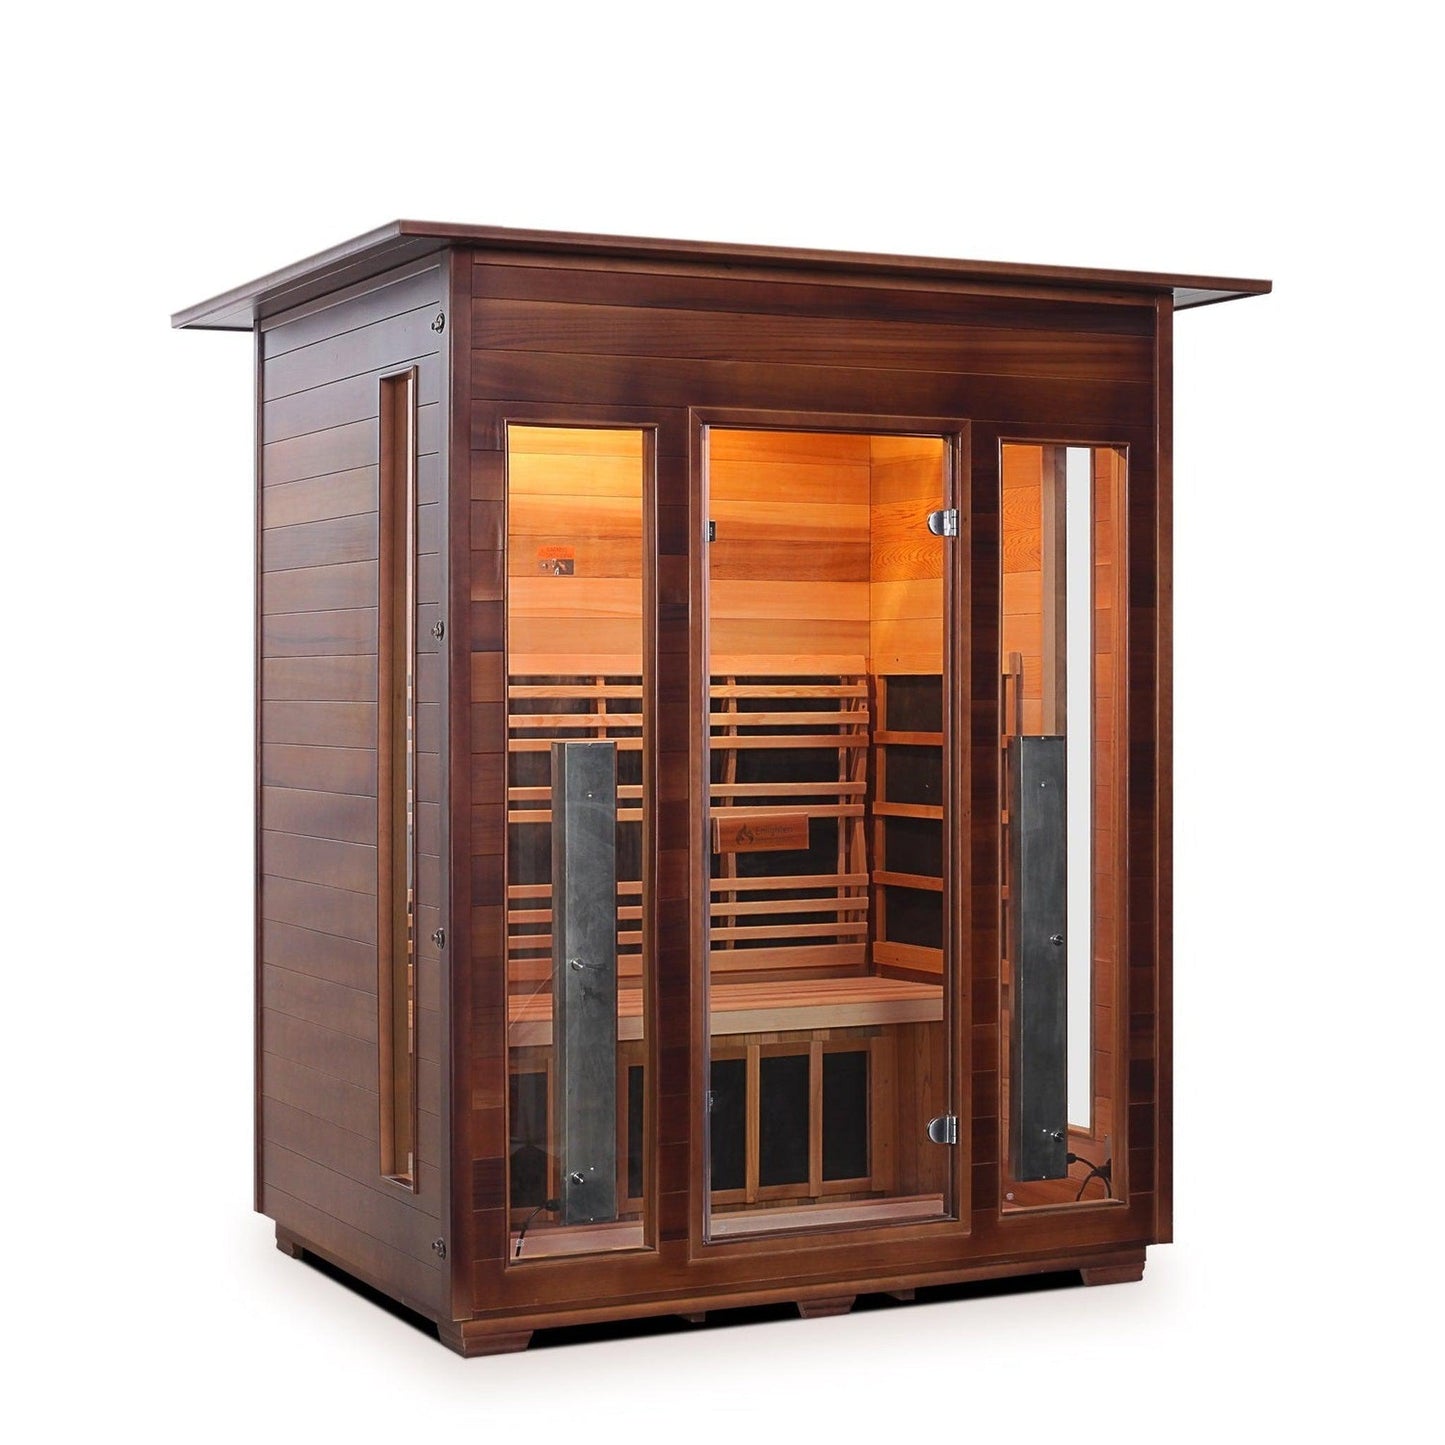 Enlighten InfraNature Duet Diamond 3-Person Hybrid Infrared/Traditional Indoor Sauna